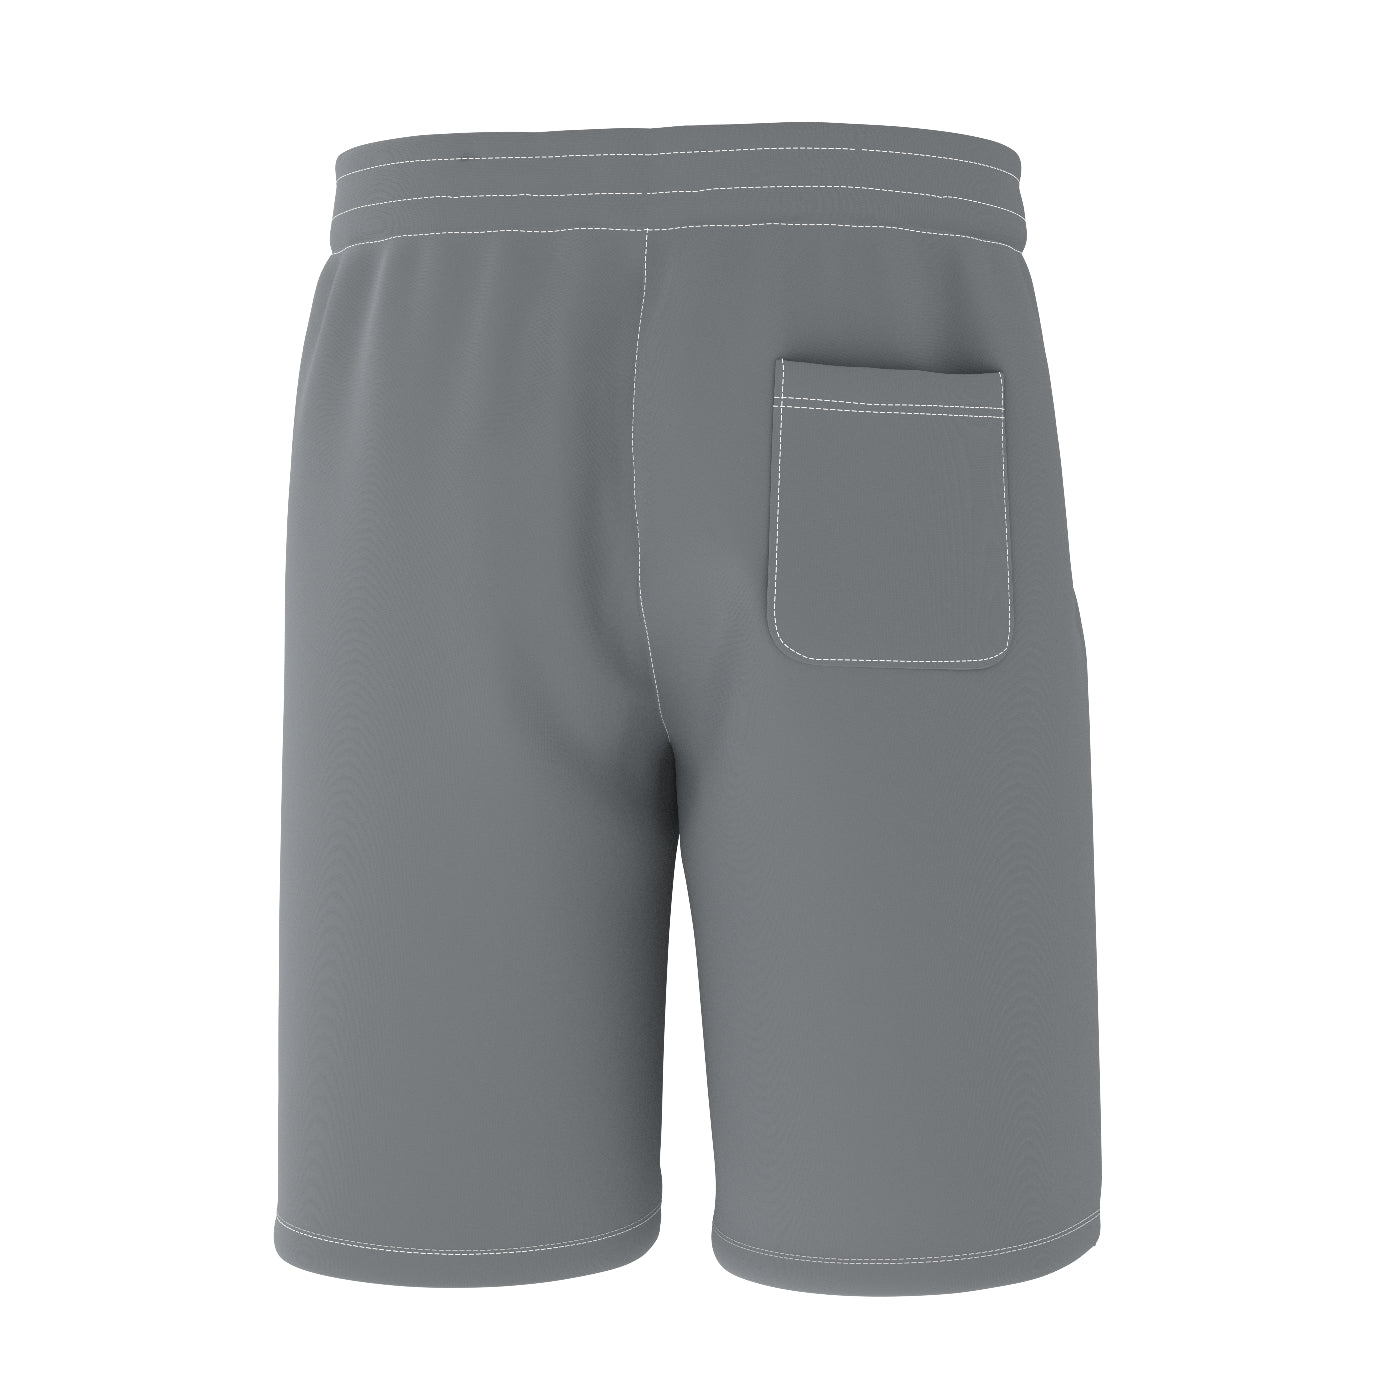 Ultimate Gray Shorts